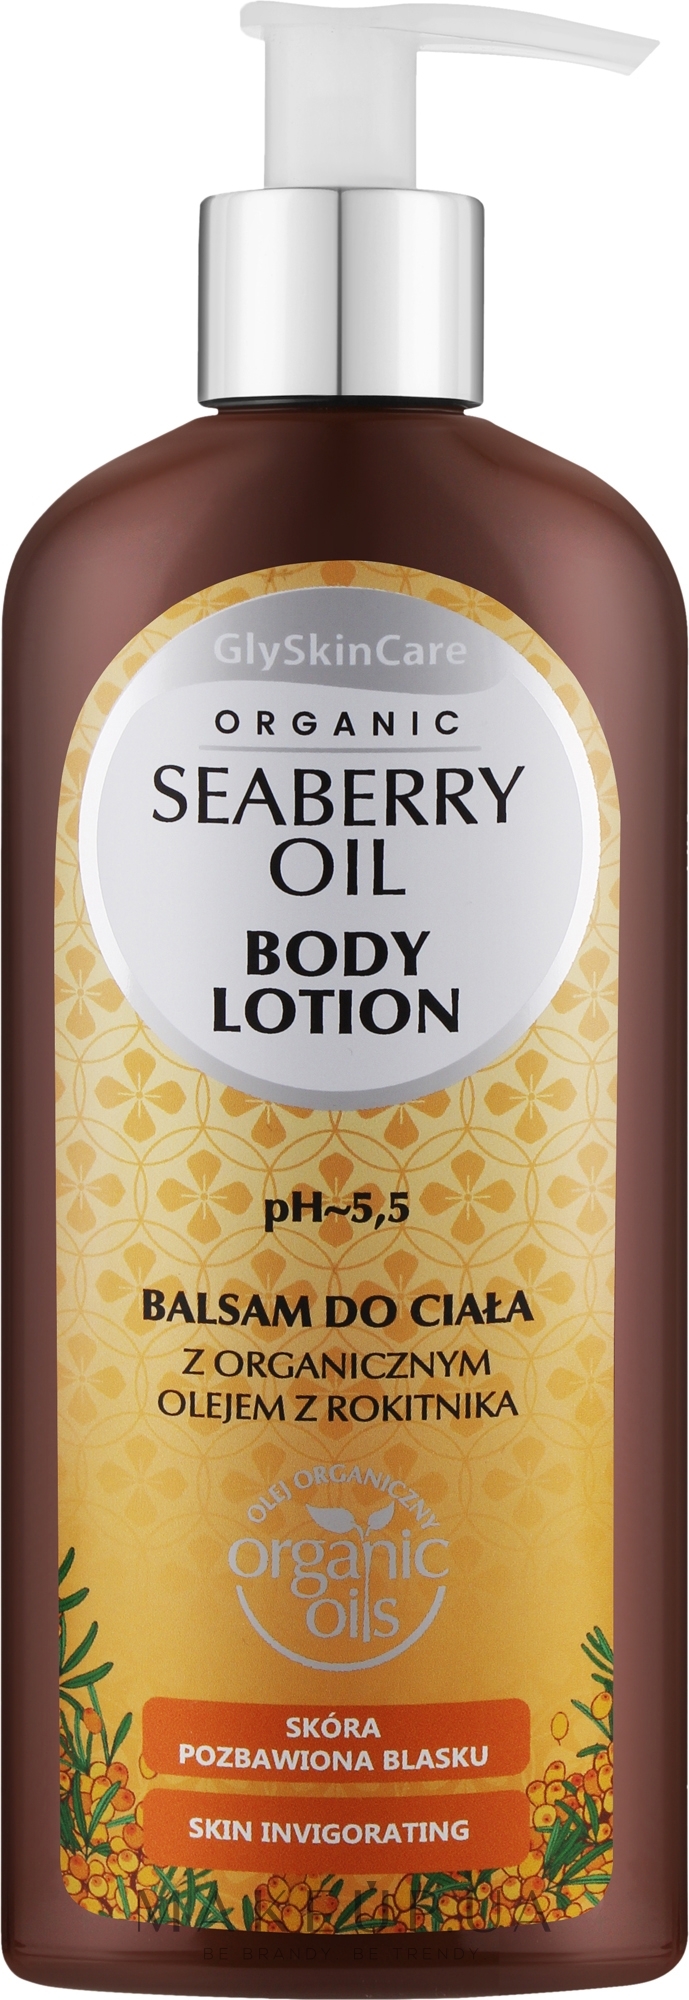 Лосьон для тела с органическим маслом облепихи - GlySkinCare Organic Seaberry Oil Body Lotion — фото 250ml